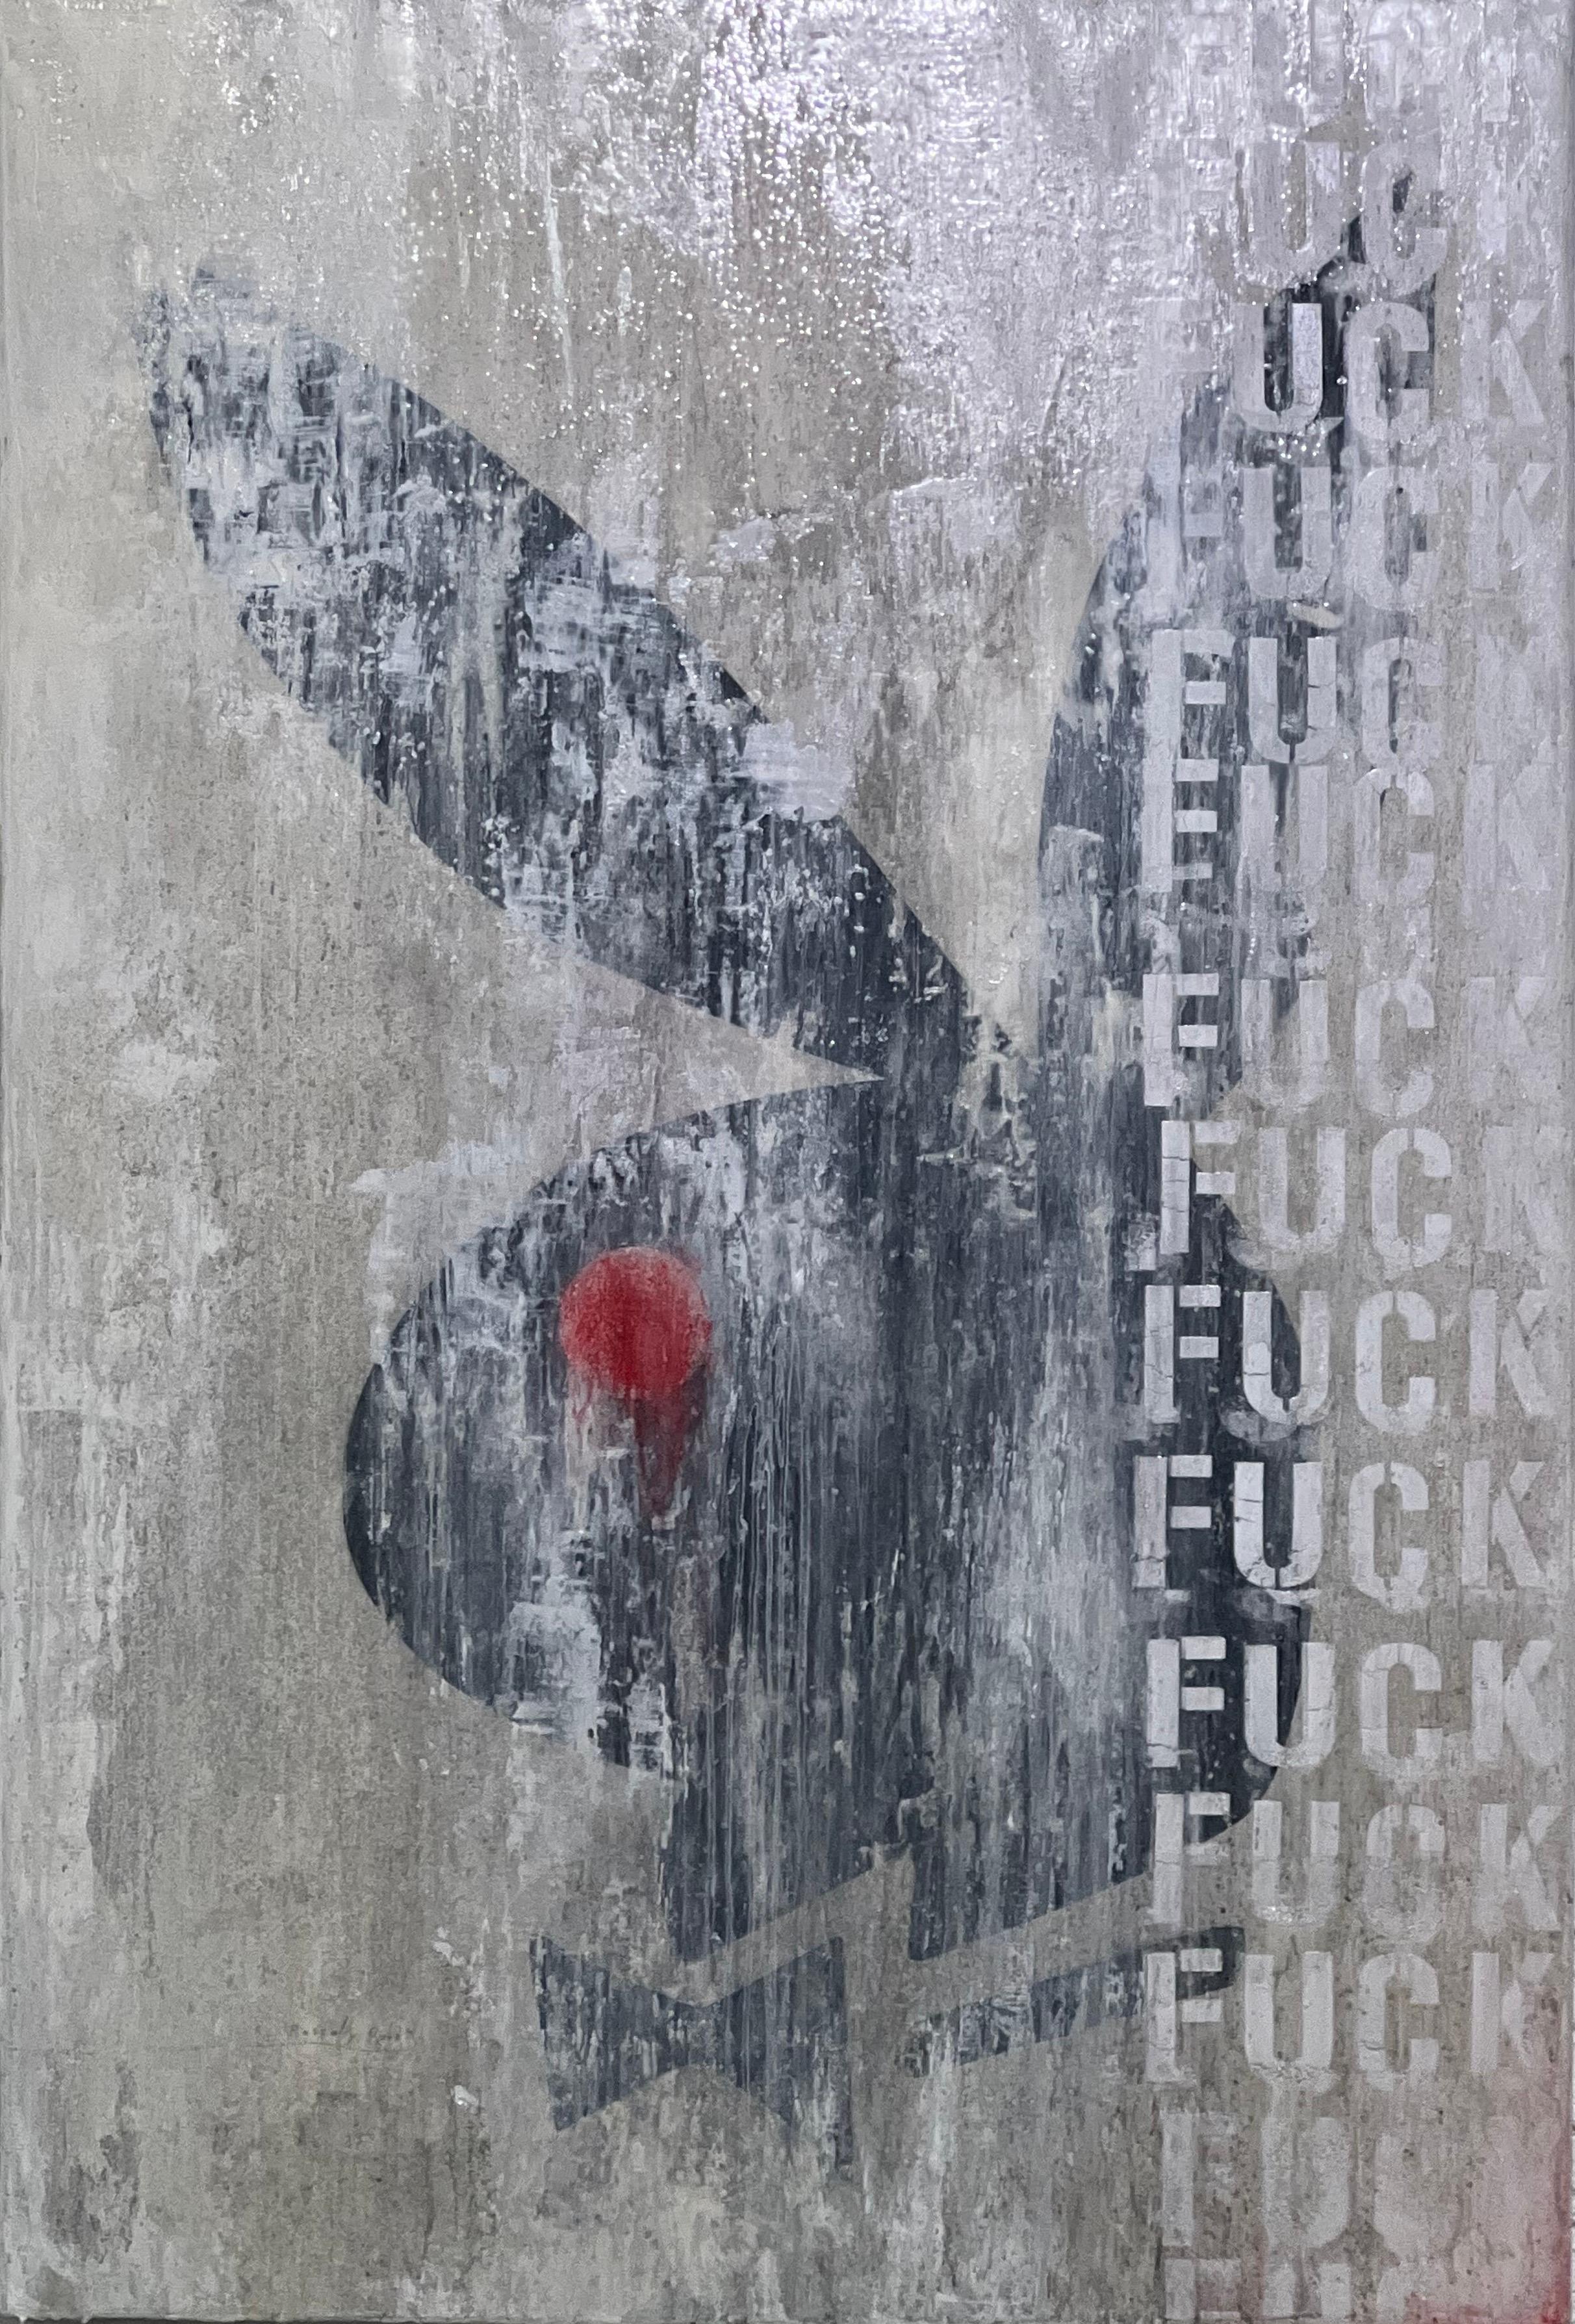 „F*ck Bunny“, Gemälde in Mischtechnik, 65" x 44" Zoll, von Ben Cope 